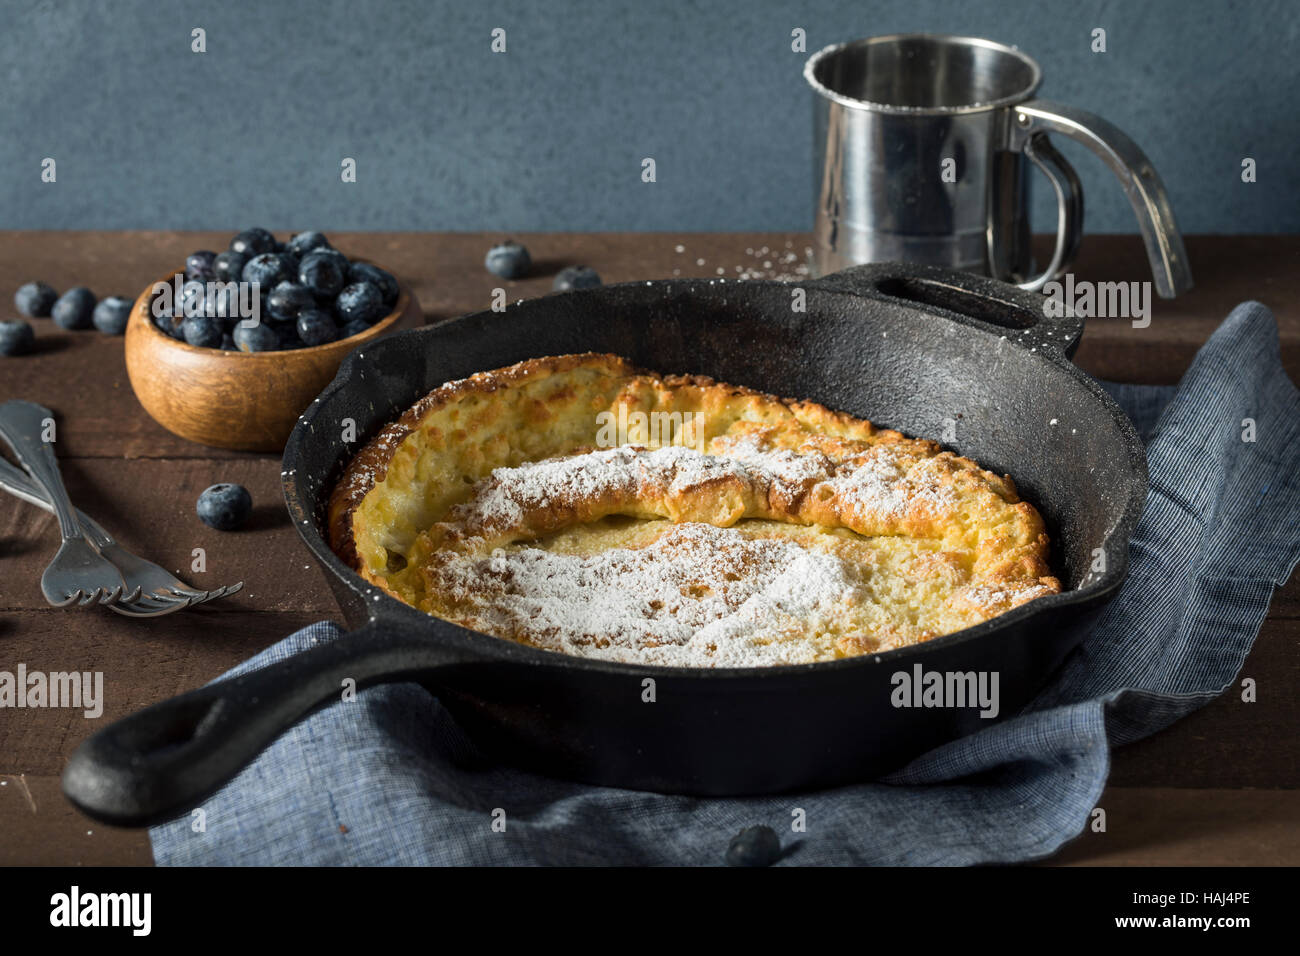 https://c8.alamy.com/comp/HAJ4PE/homemade-dutch-baby-pancake-with-blueberries-and-powdered-sugar-HAJ4PE.jpg